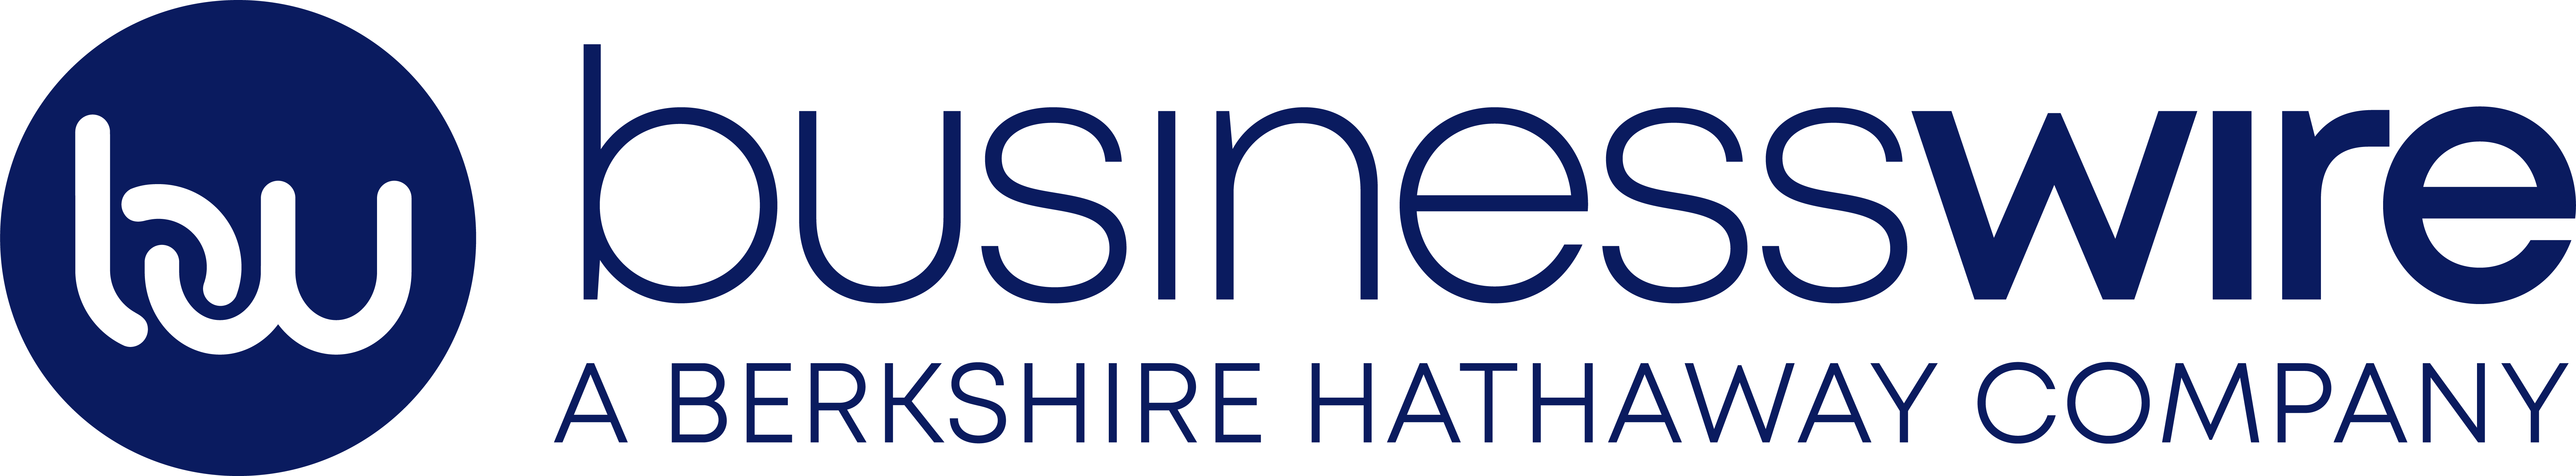 企業情報 - Business Wire Logo Small Navy